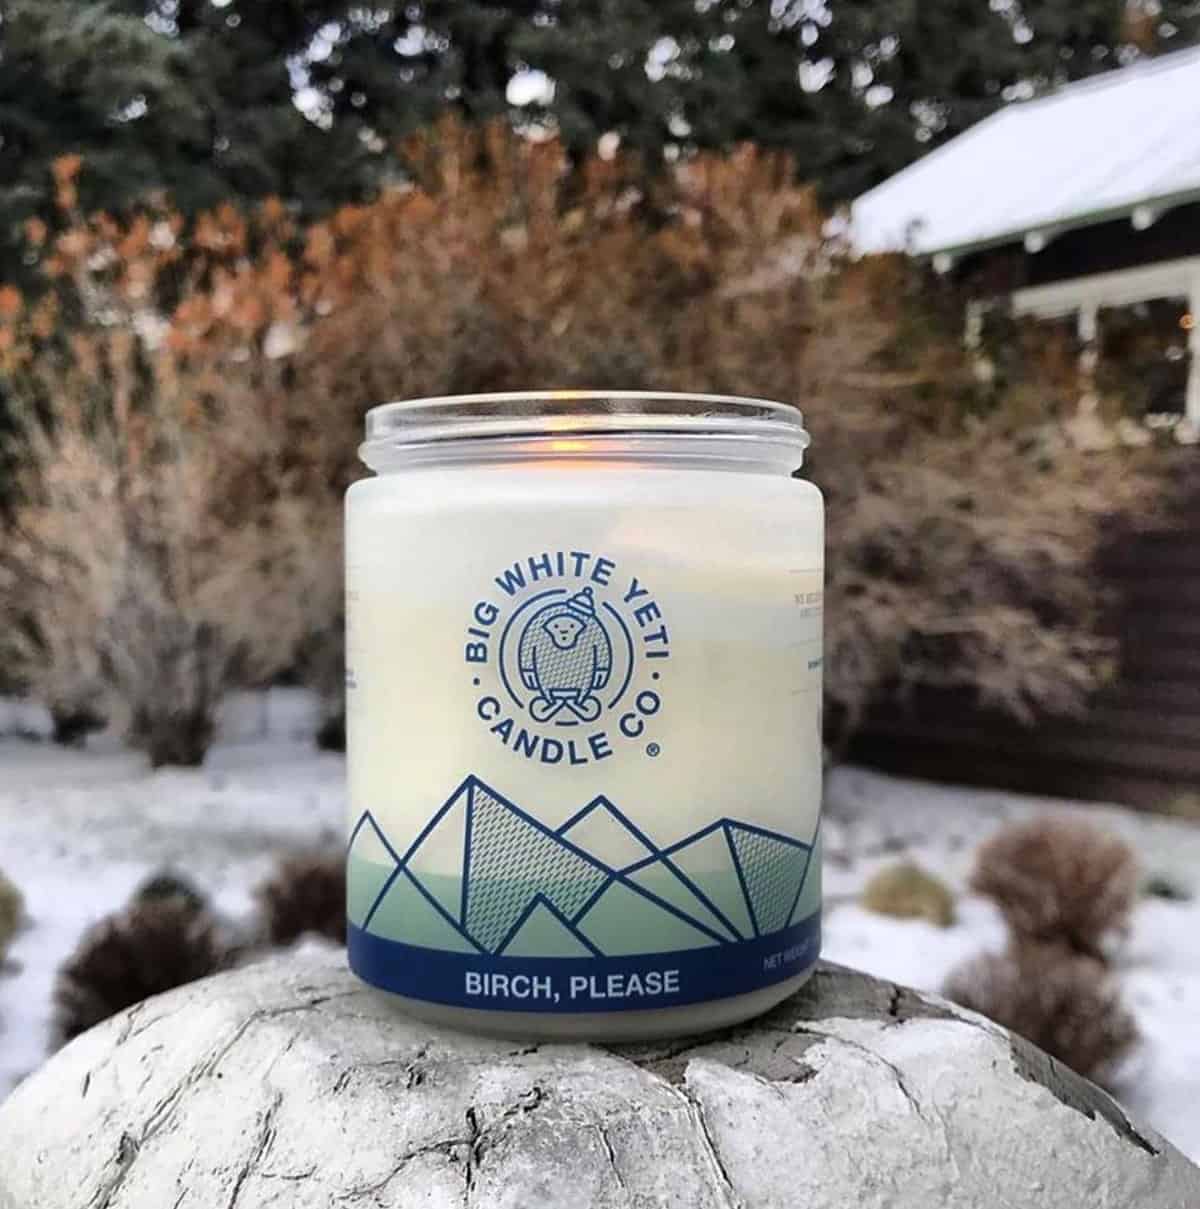 A Big White Yeti brand vegan candle.